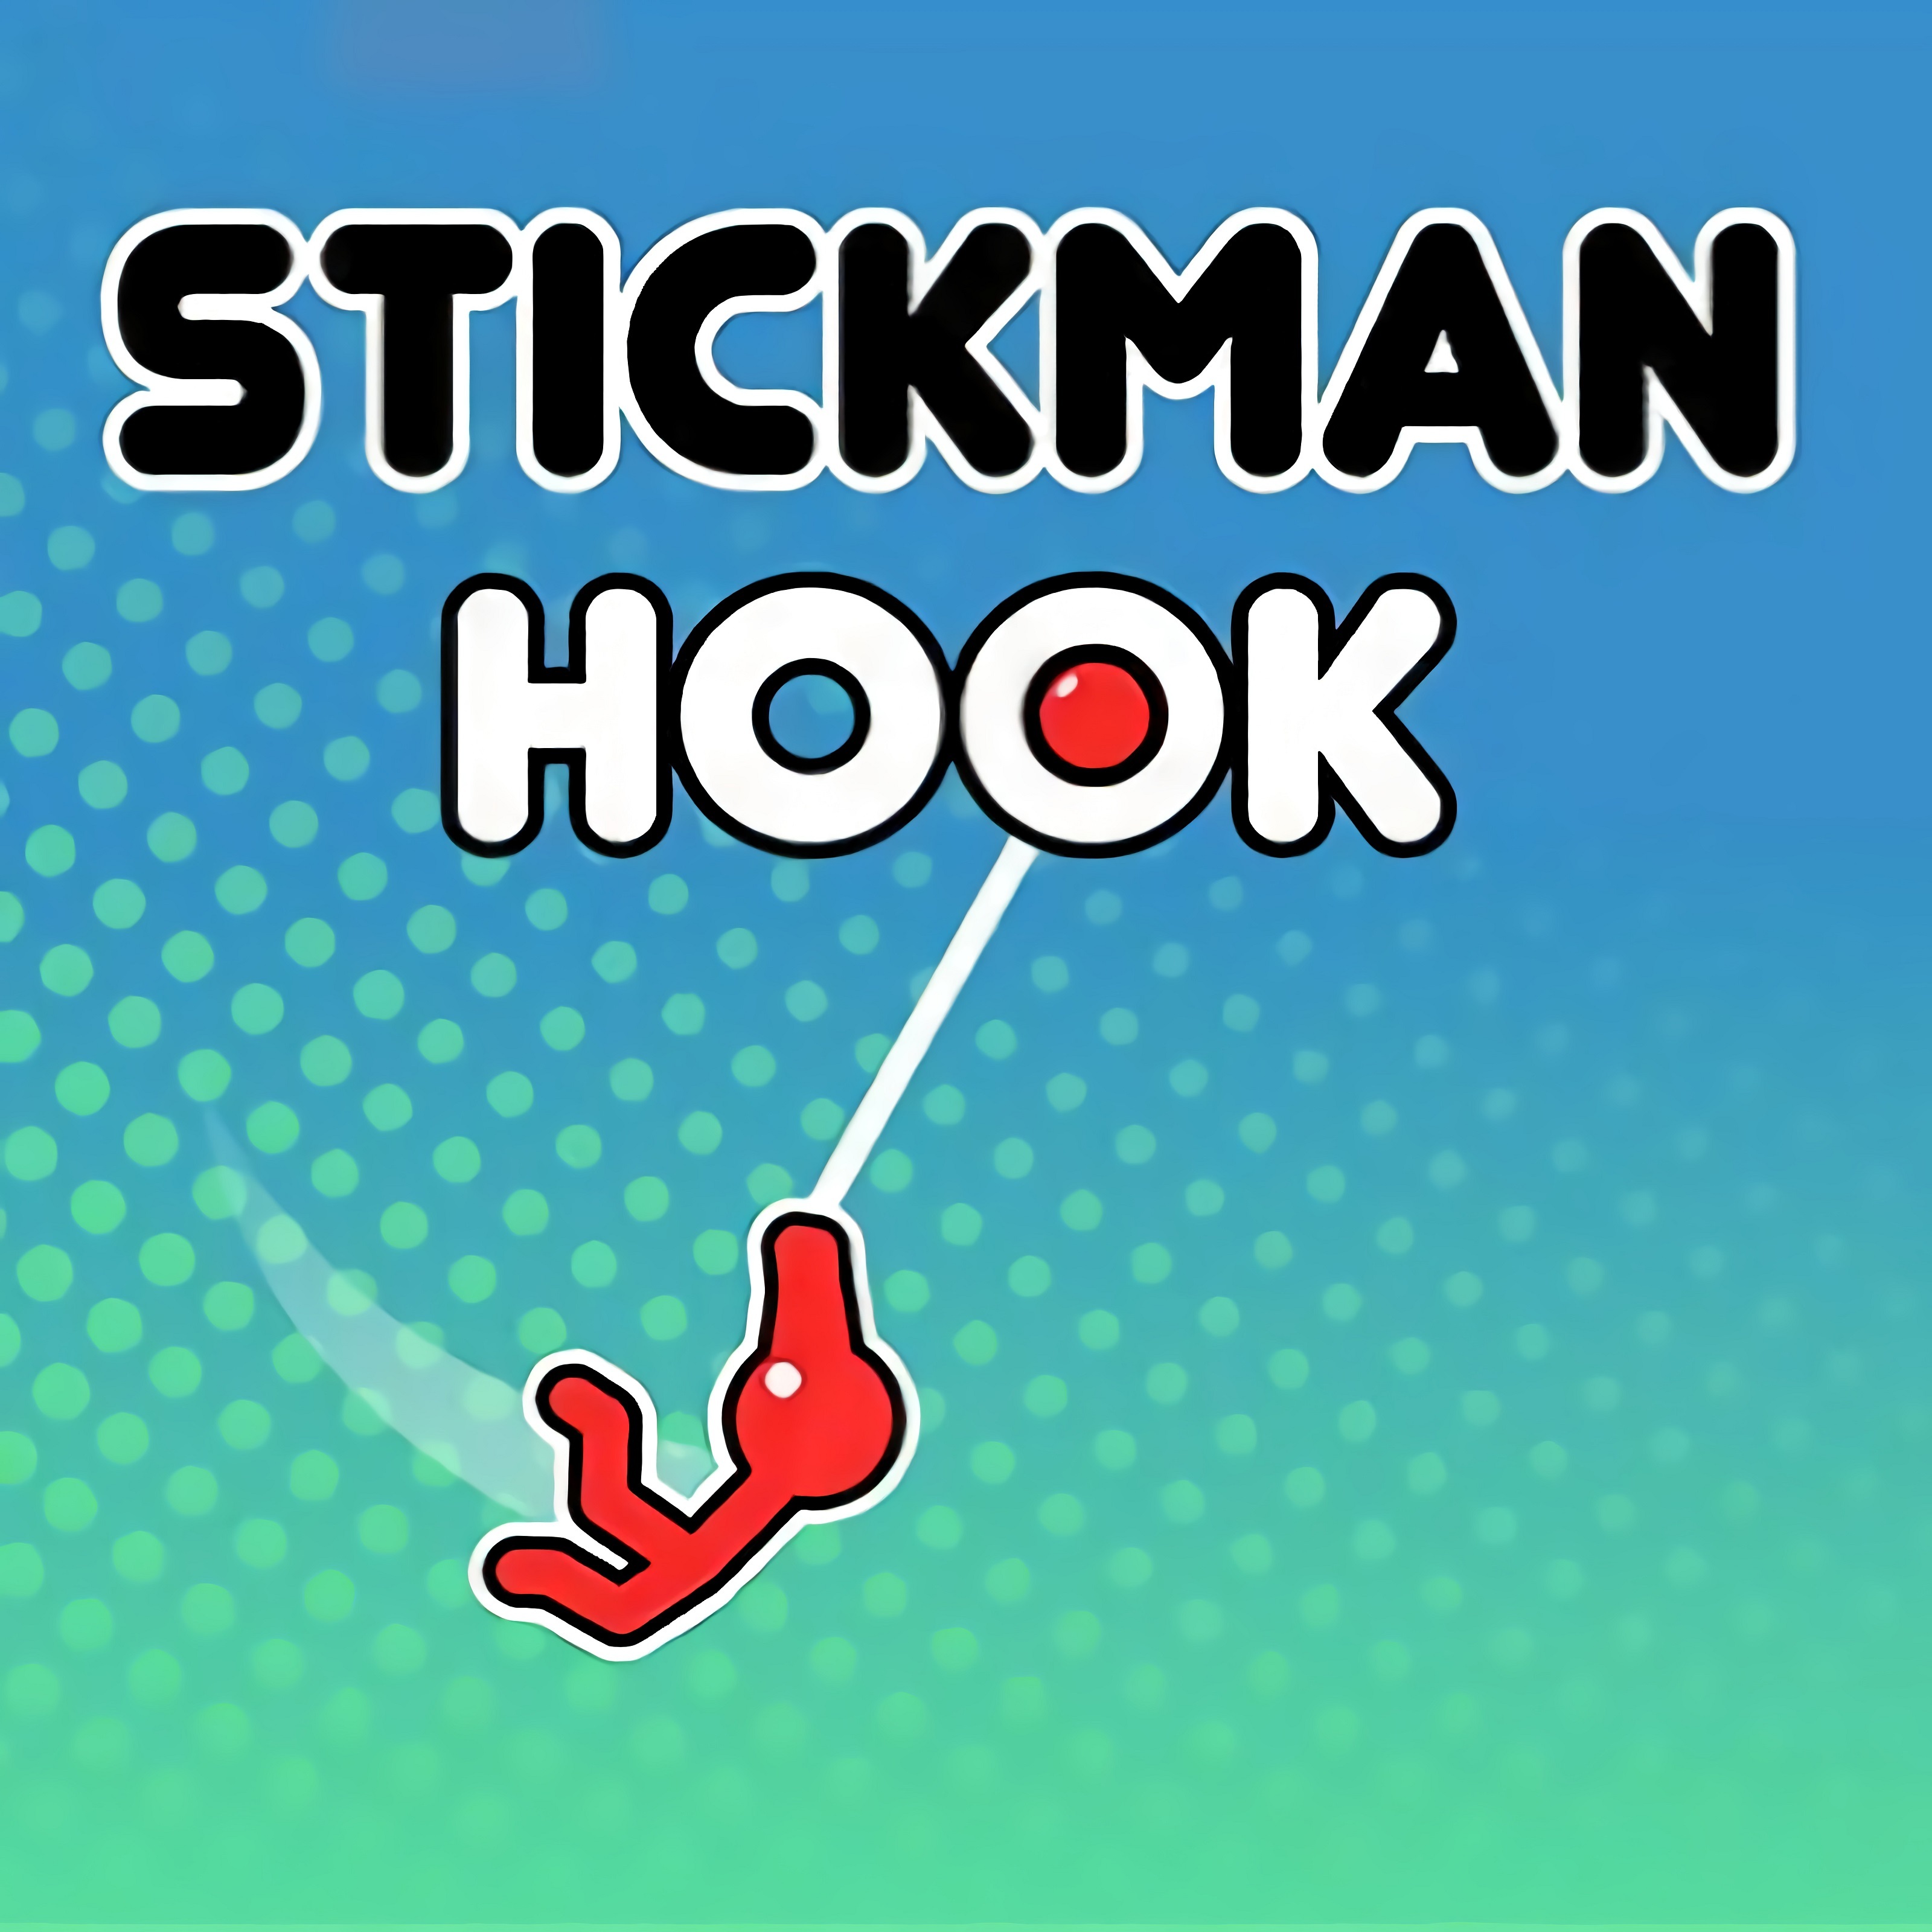 Super Stickman Hook game play at